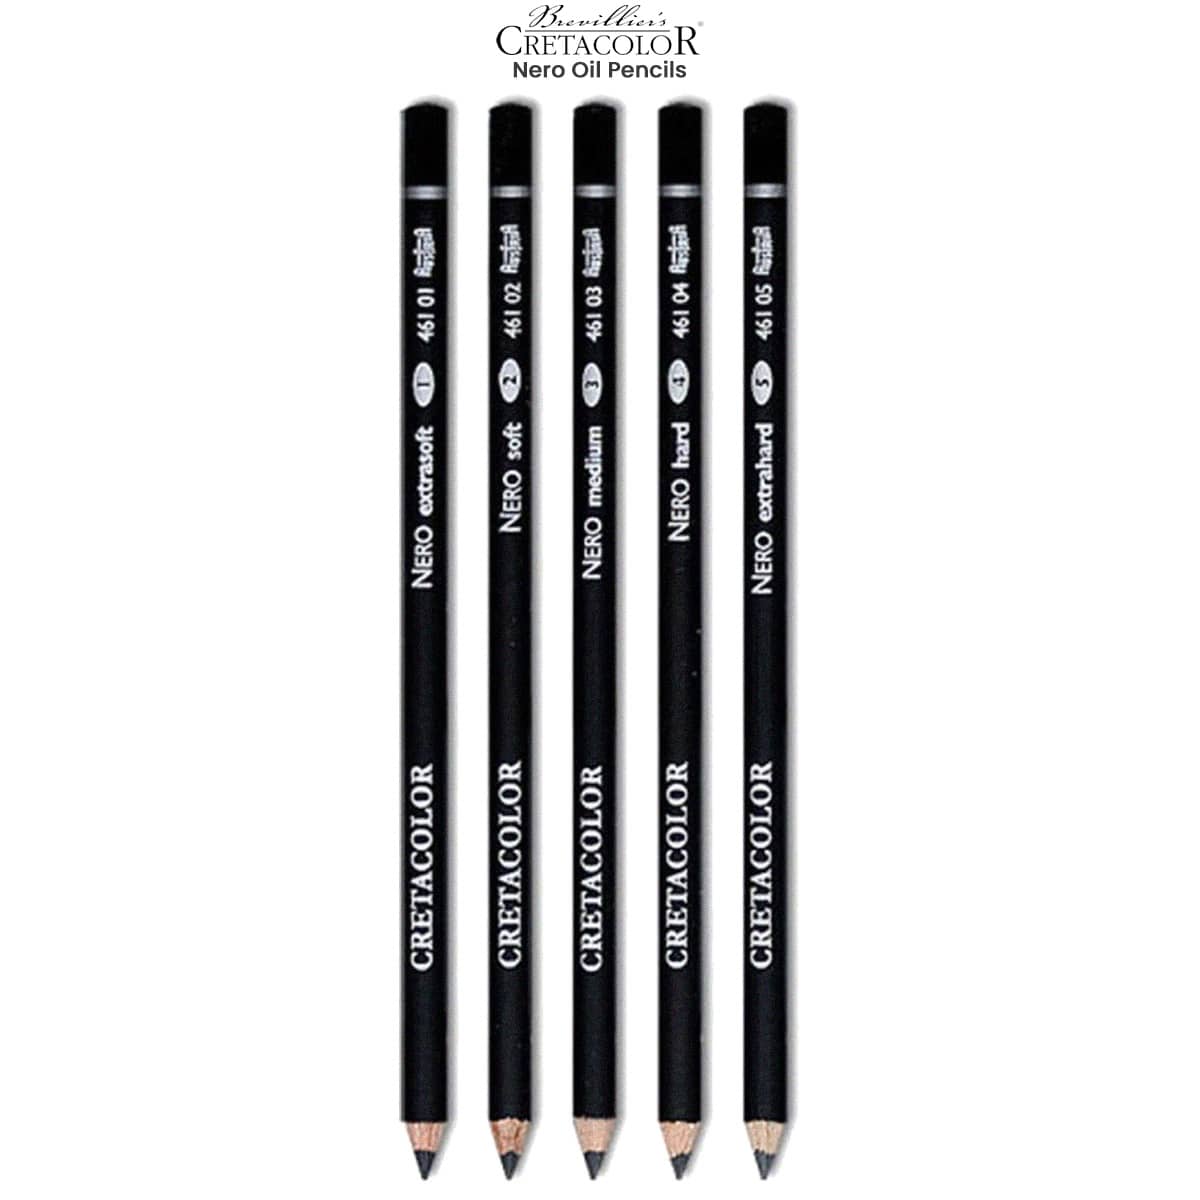 Cretacolor Nero Oil Pencils Packs of 3